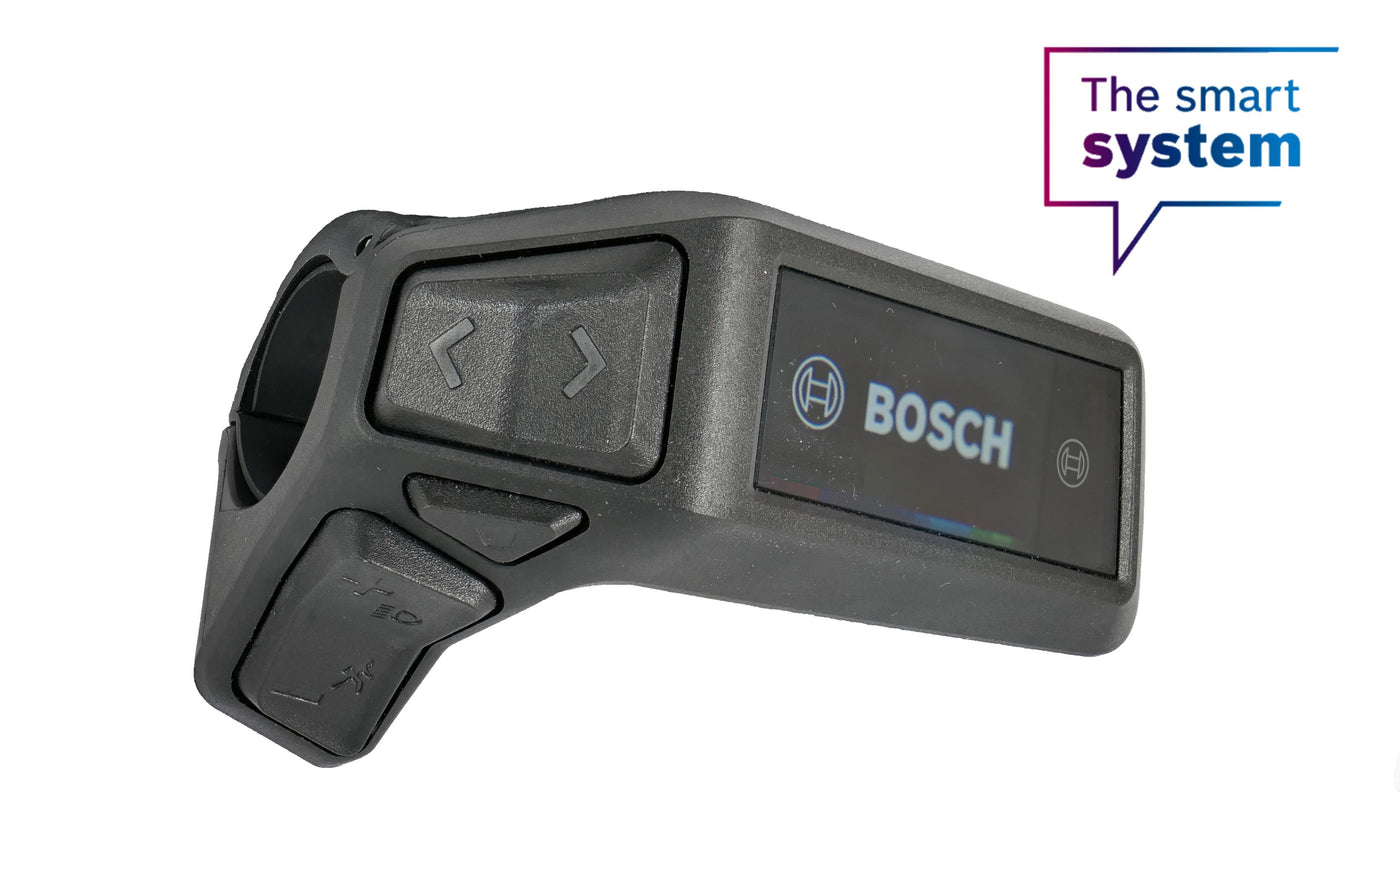 BOSCH Purion 200 Display & Control Unit Bosch Smart System